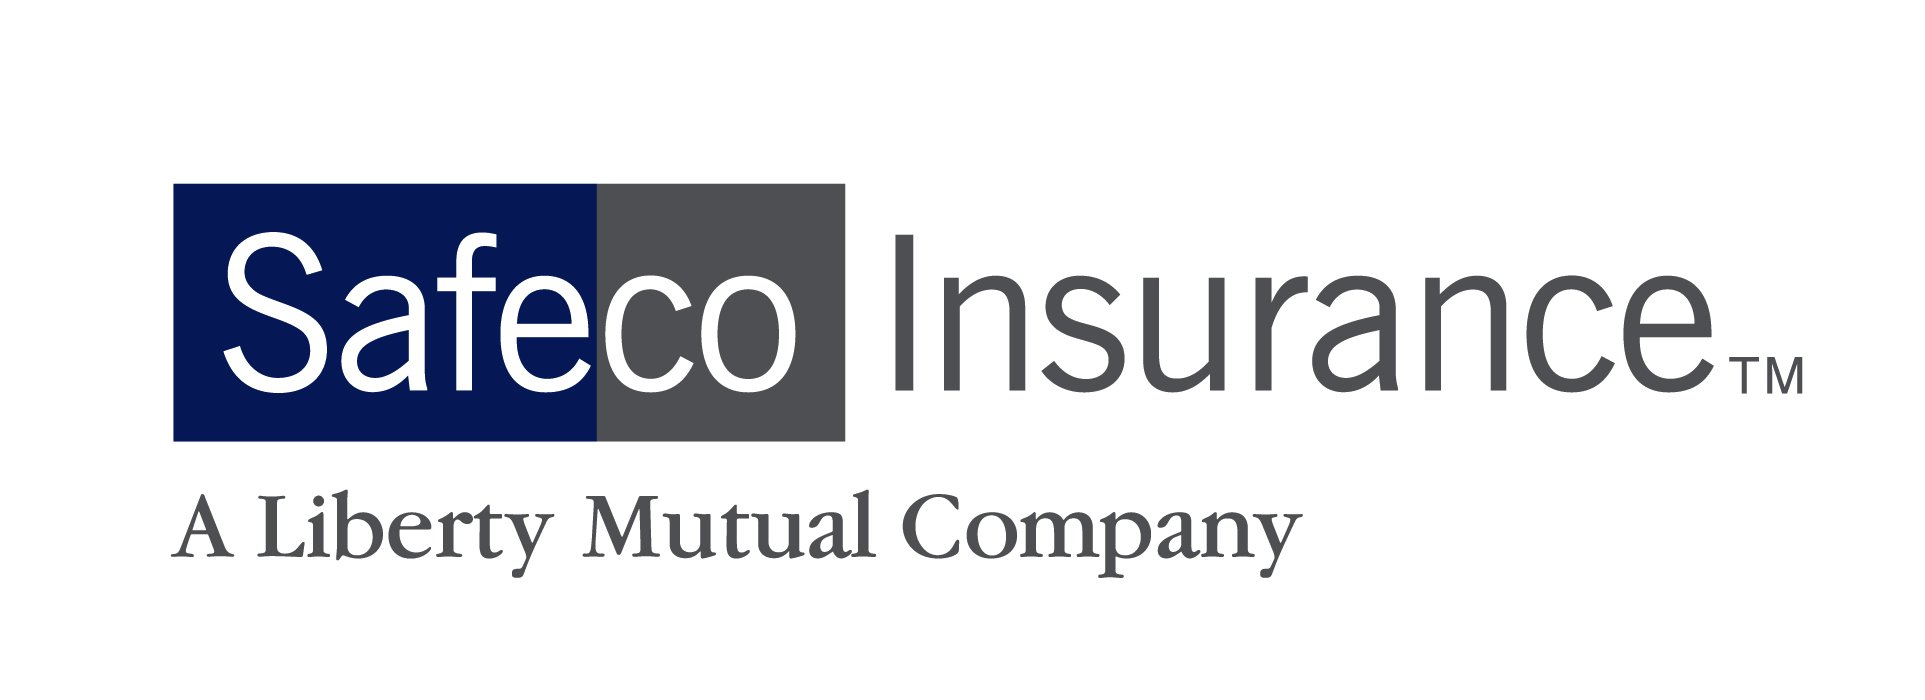 Safeco Home Insurance